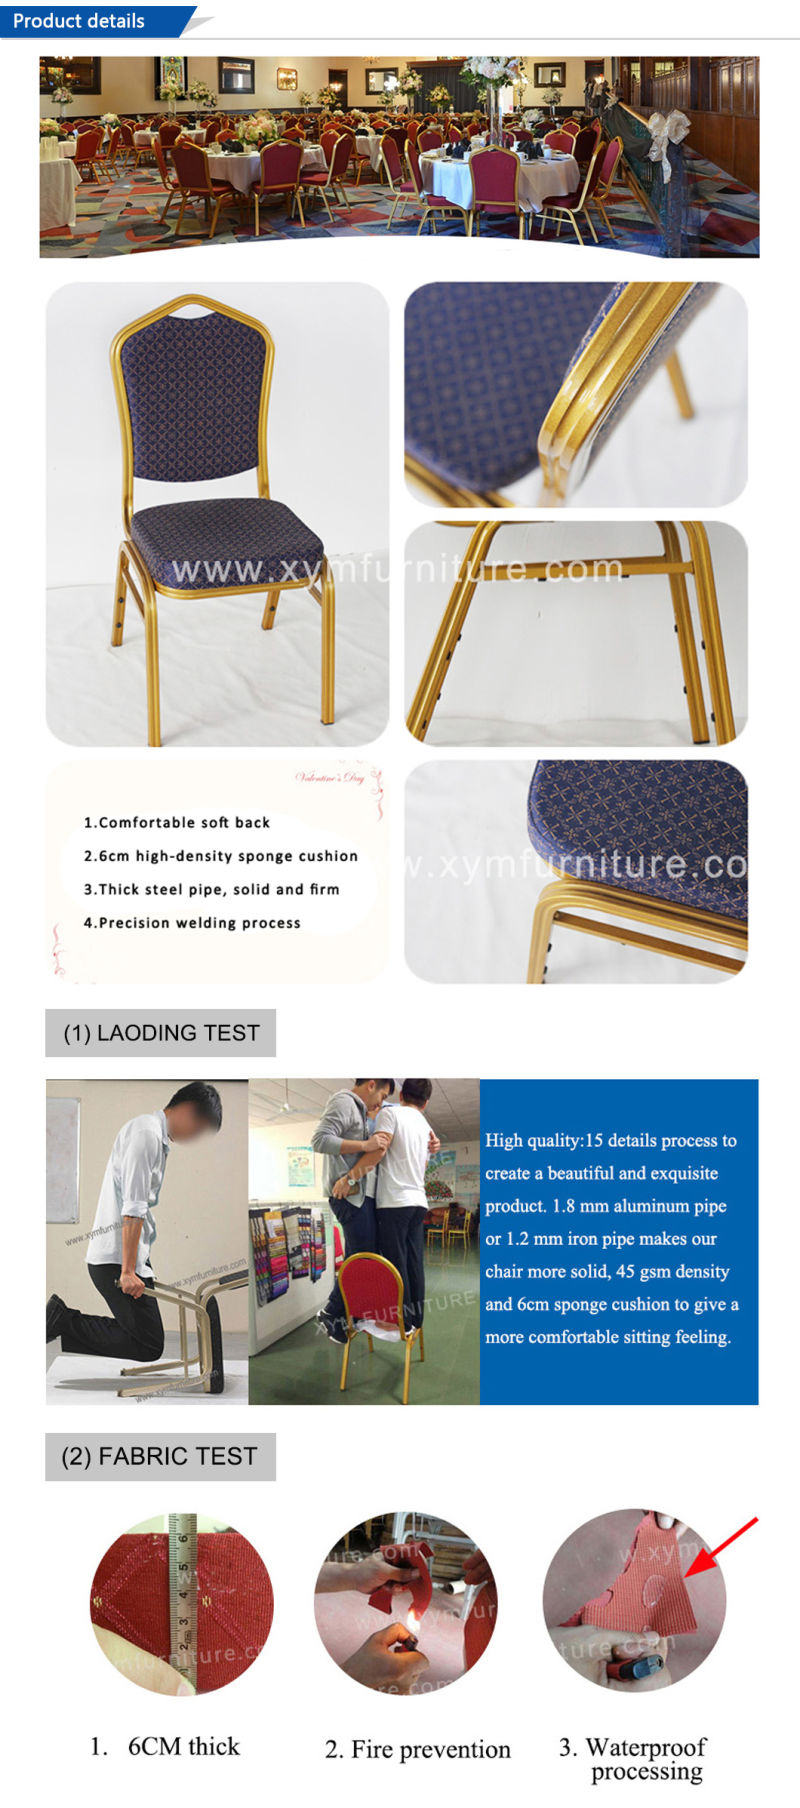 Wholesale Hotel Wedding Banquet Steel Chairs (XYM-L06)